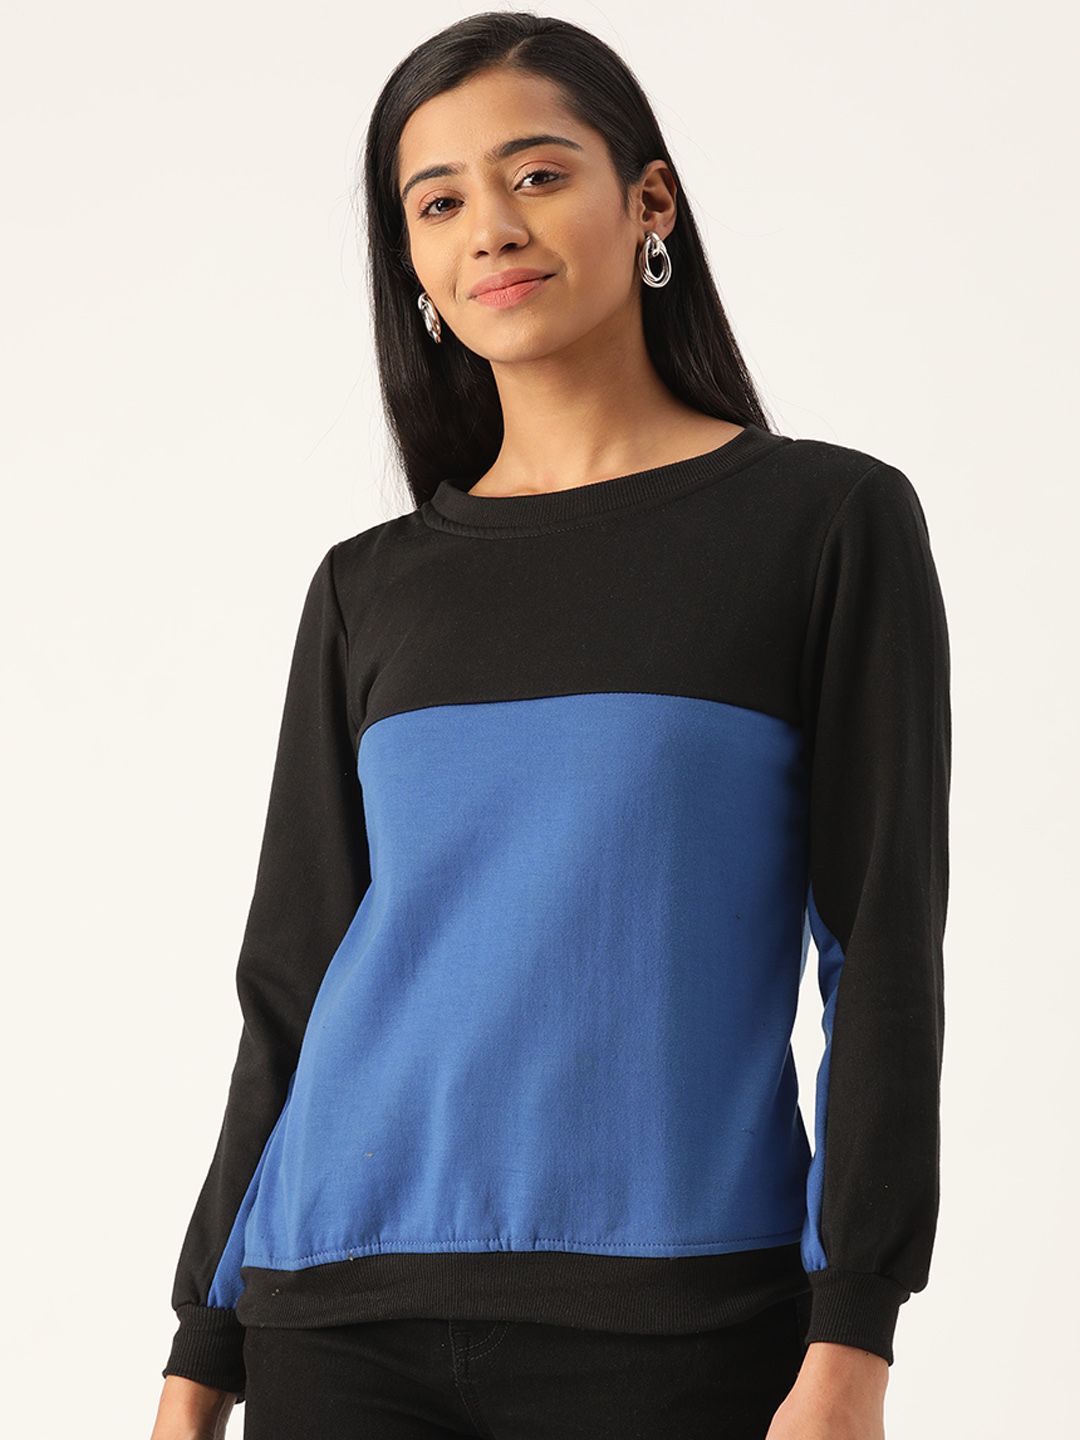 Belle Fille Women Blue & Black Colourblocked Sweatshirt Price in India